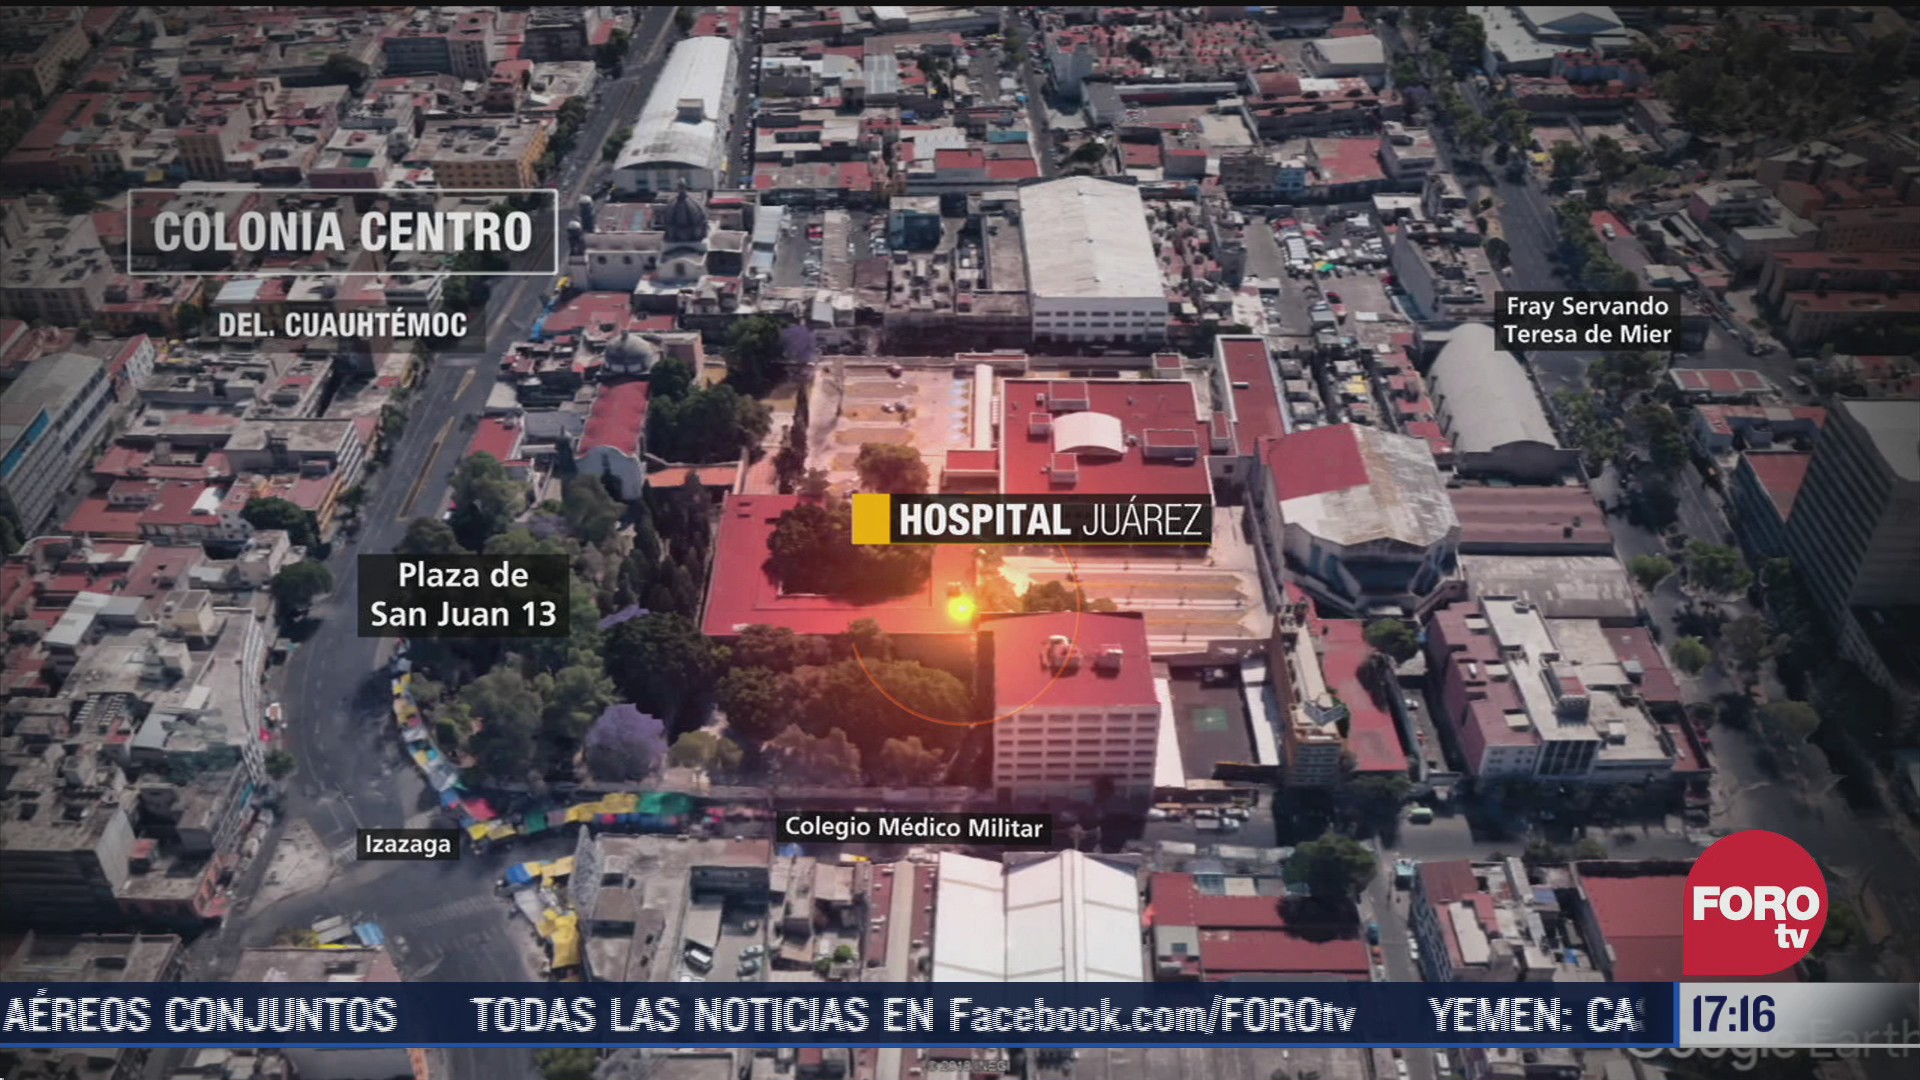 radiografia del hospital juarez tras el sismo de